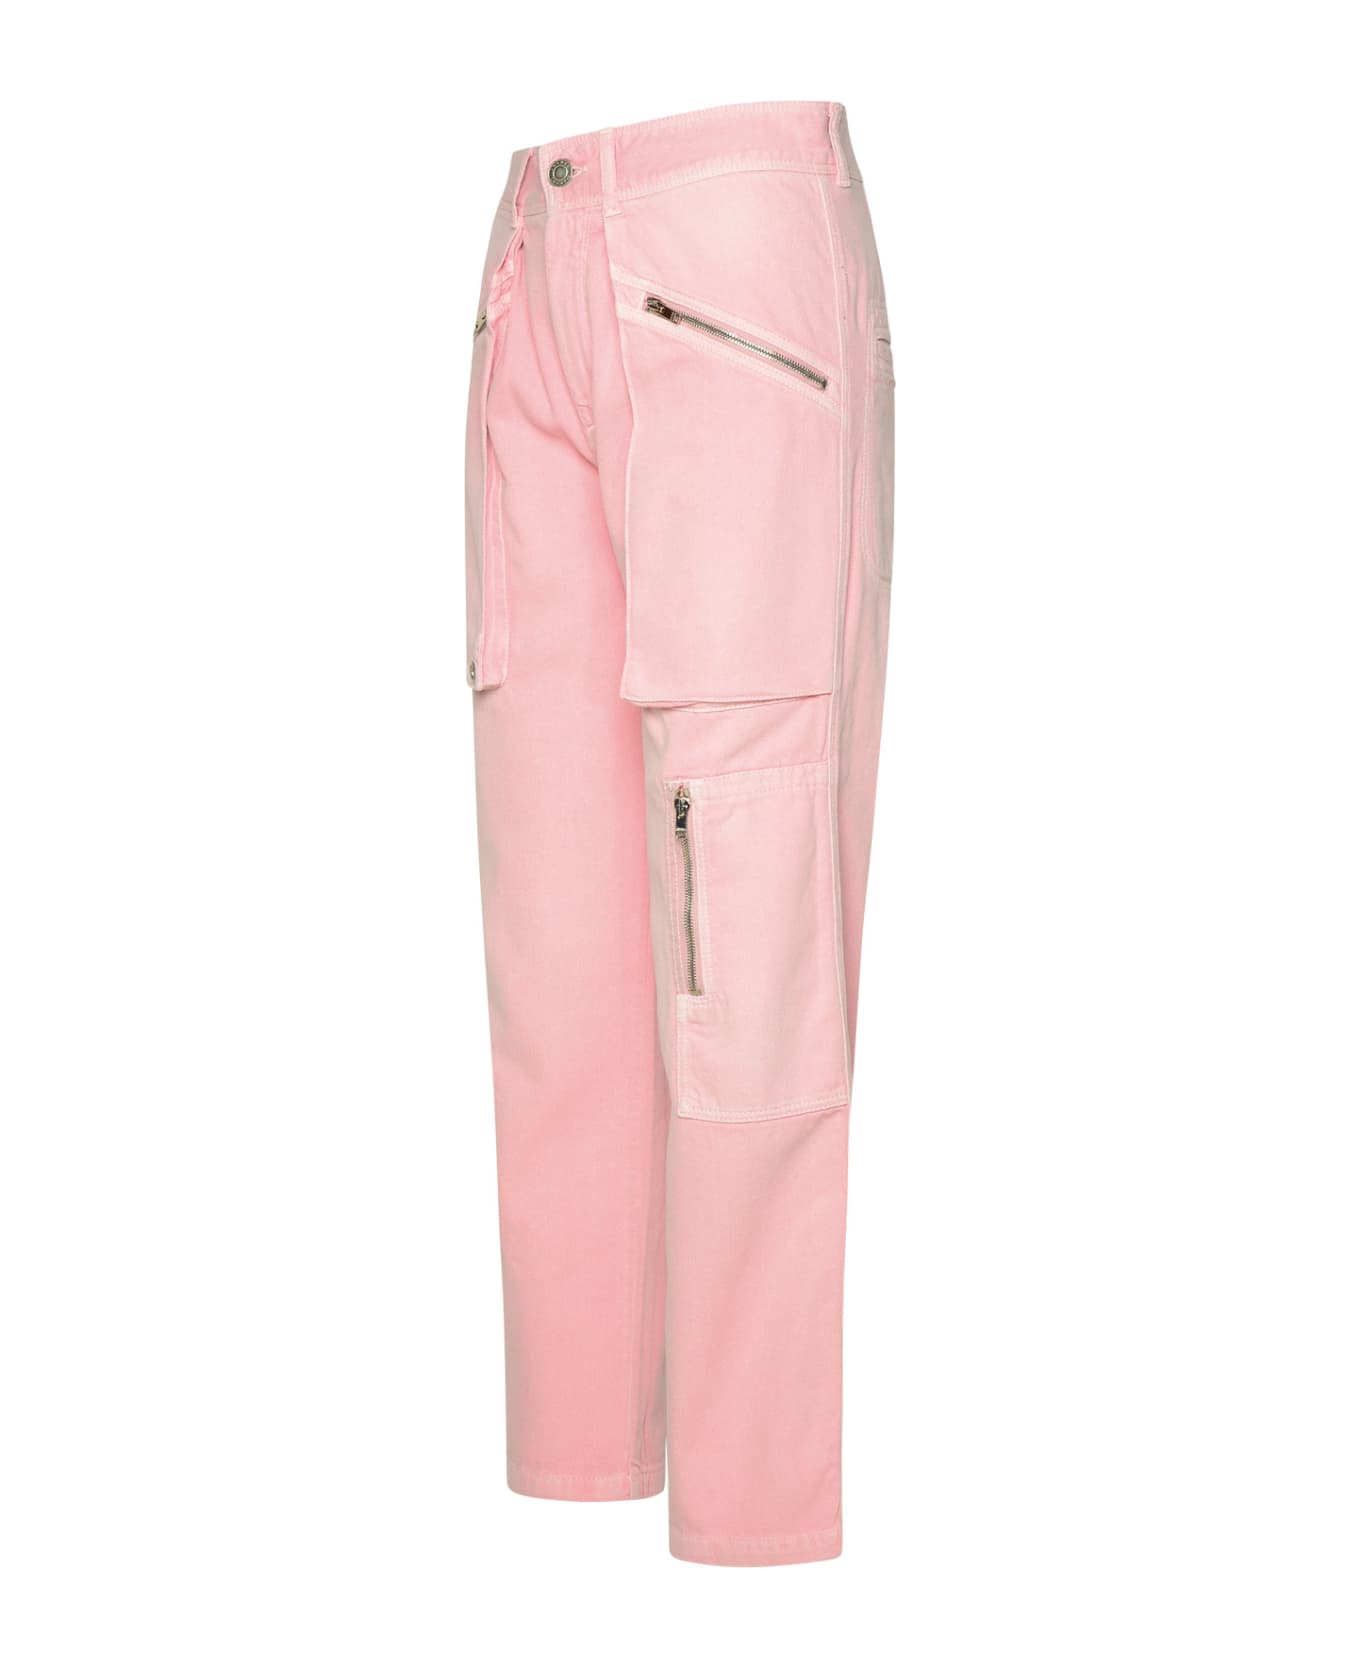 Isabel Marant 'juliette' Pink Cotton Pants - Pink ボトムス